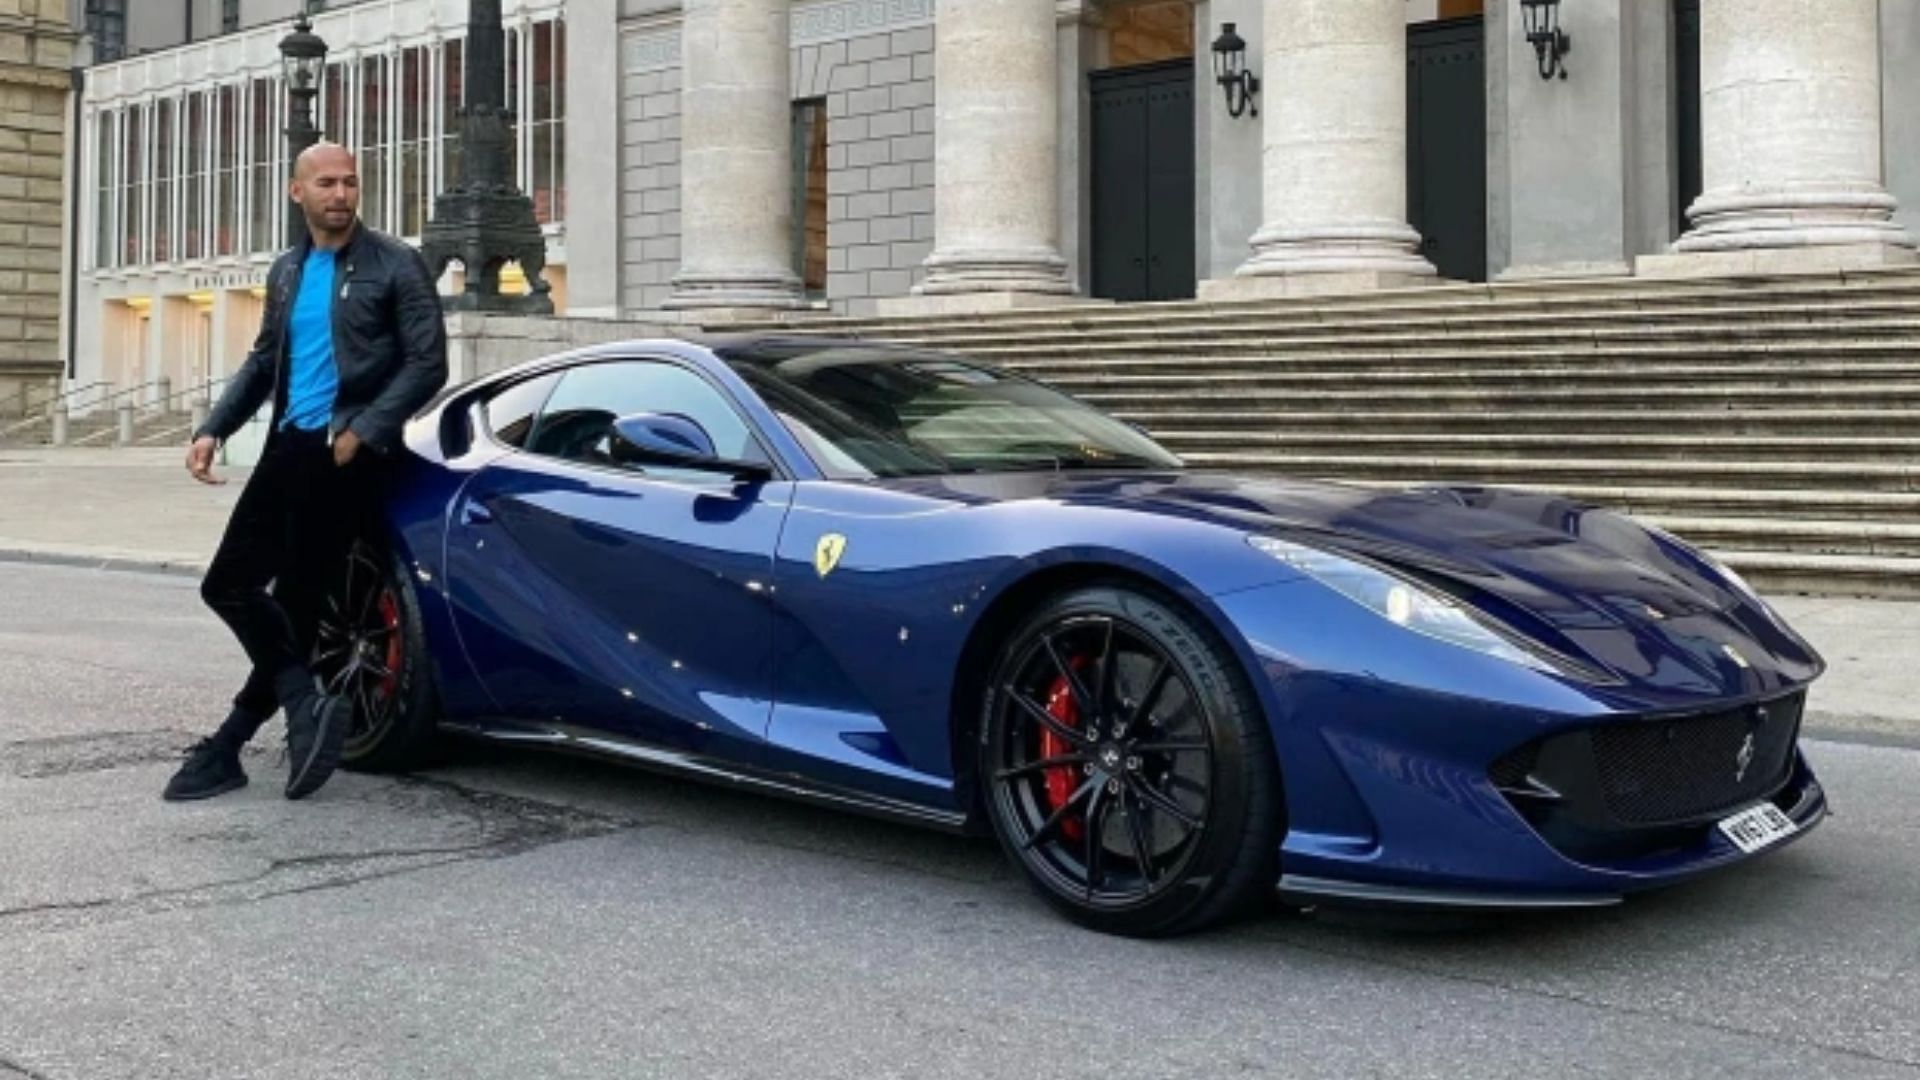 Tate's blue Ferrari 812 Superfast is a beauty (Image via Instagram)